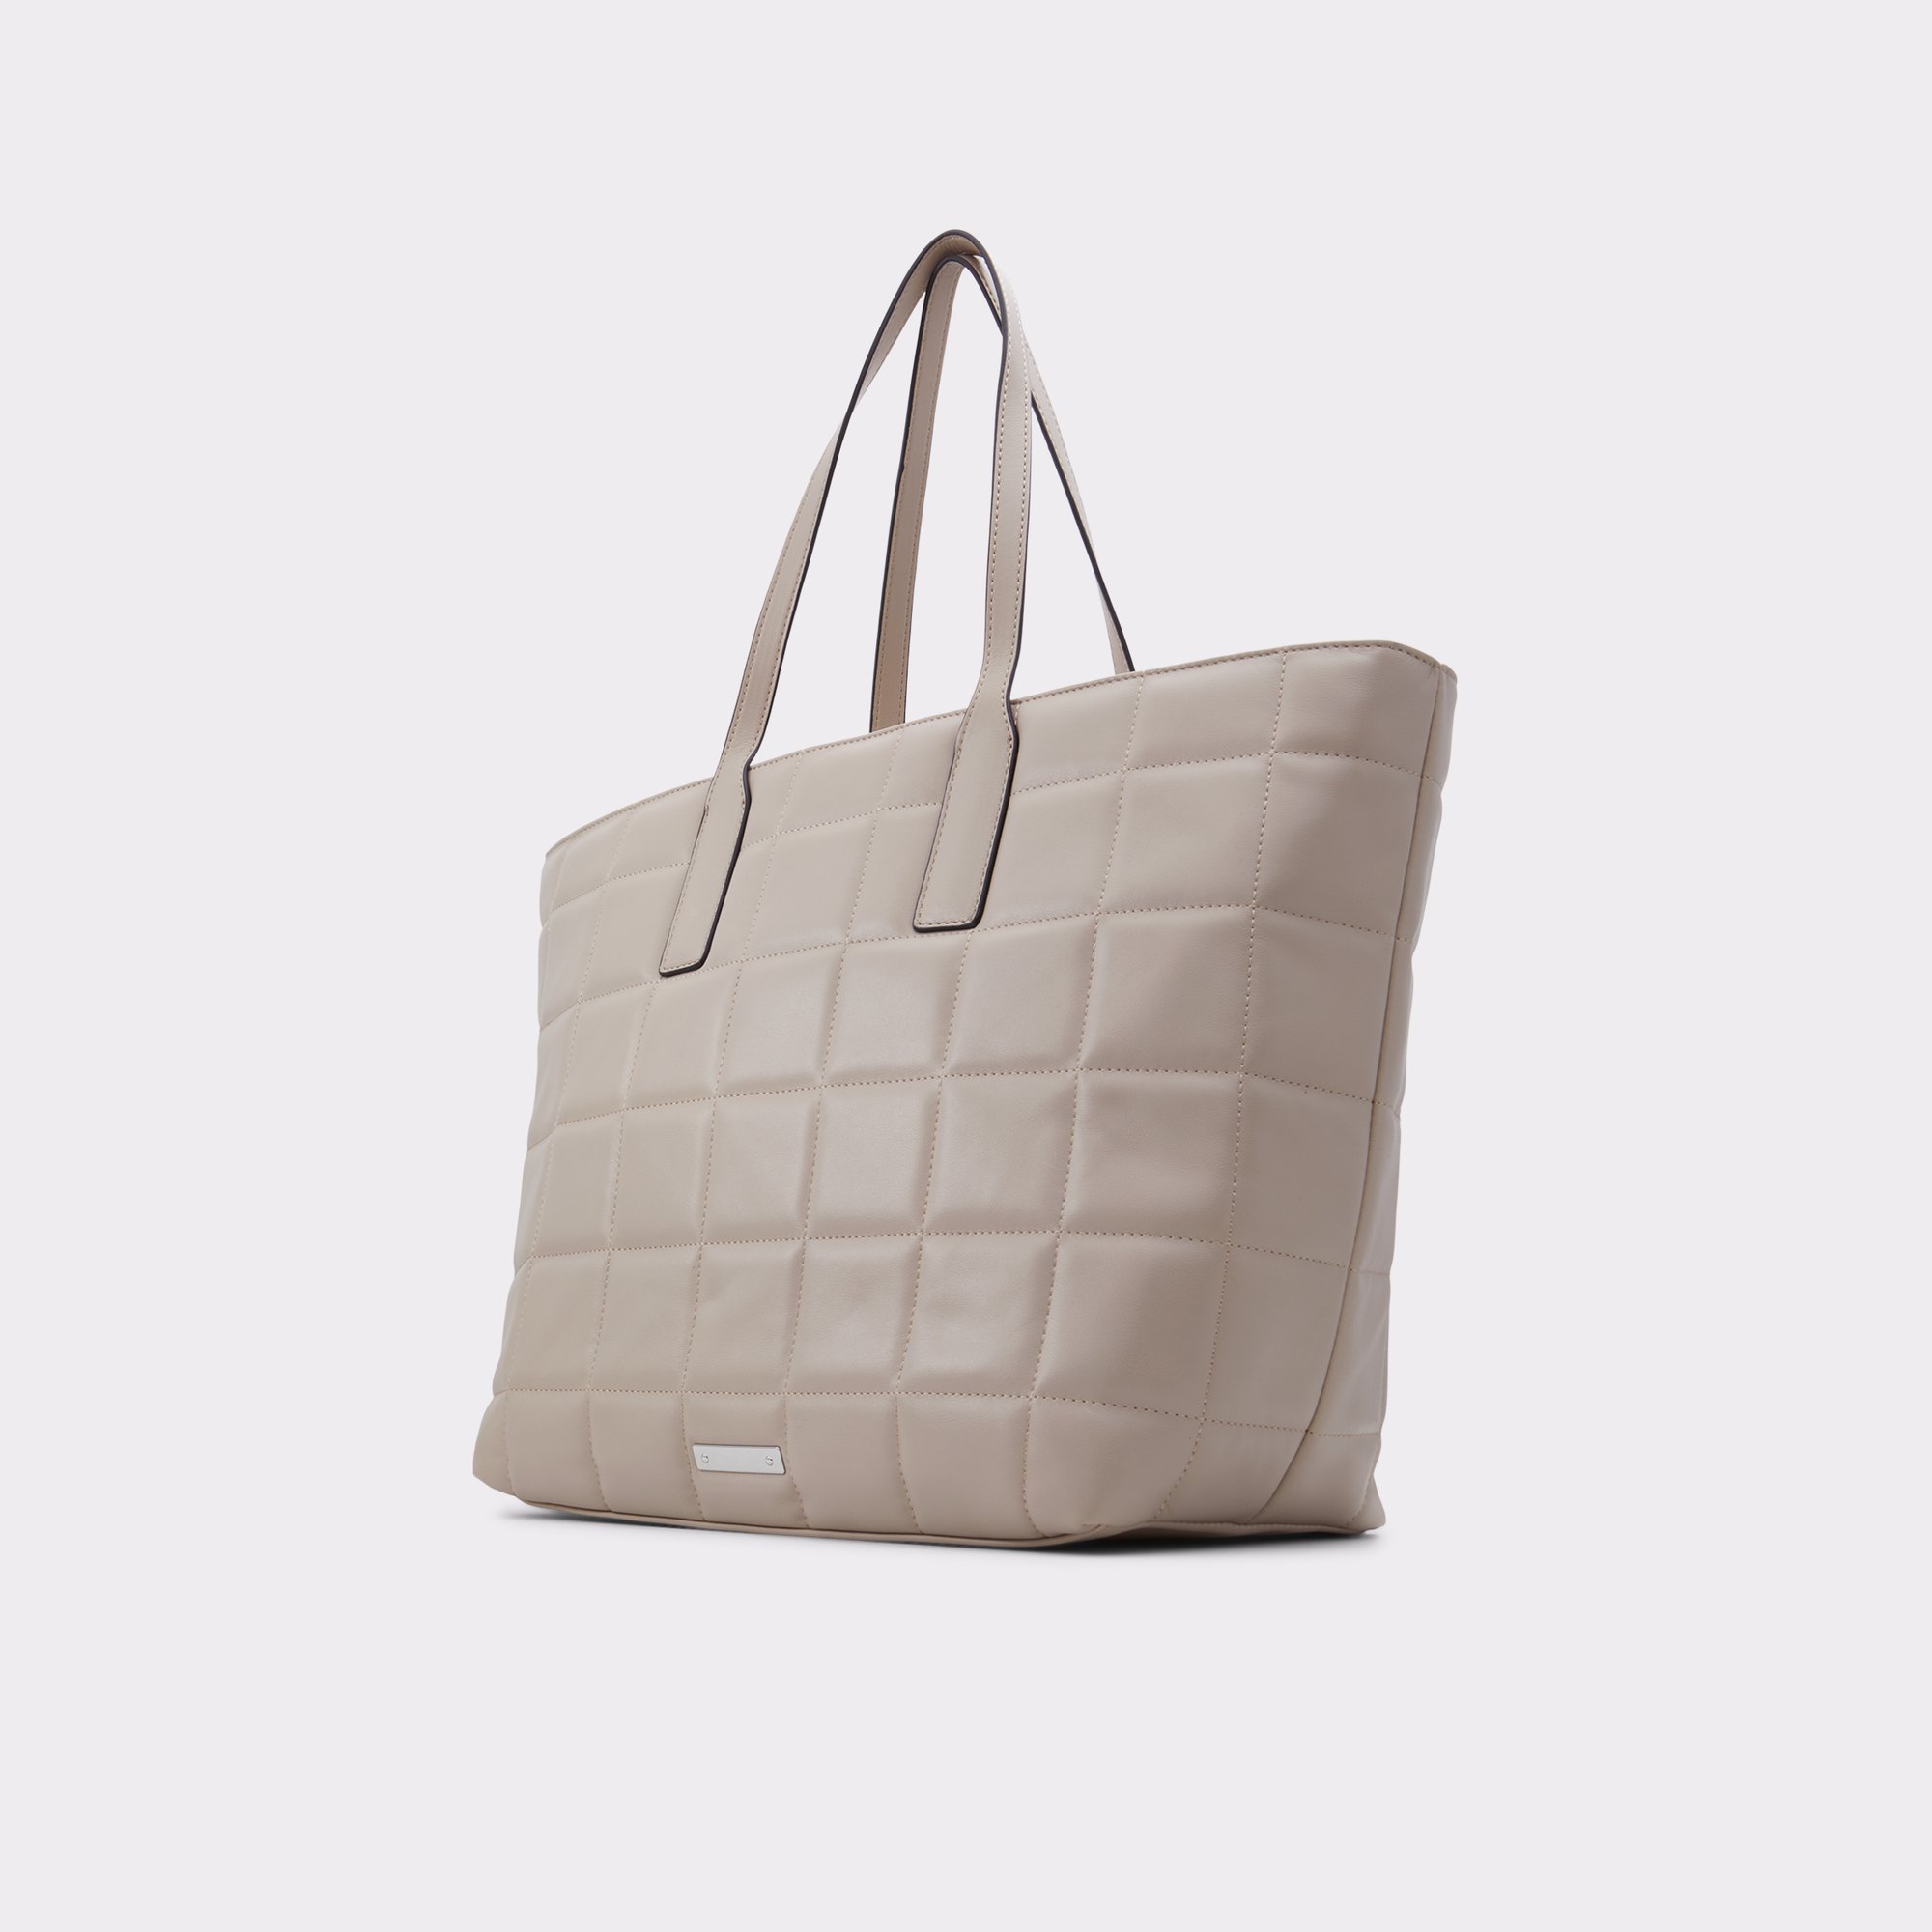 Buy Beige Handbags for Women by Aldo Online